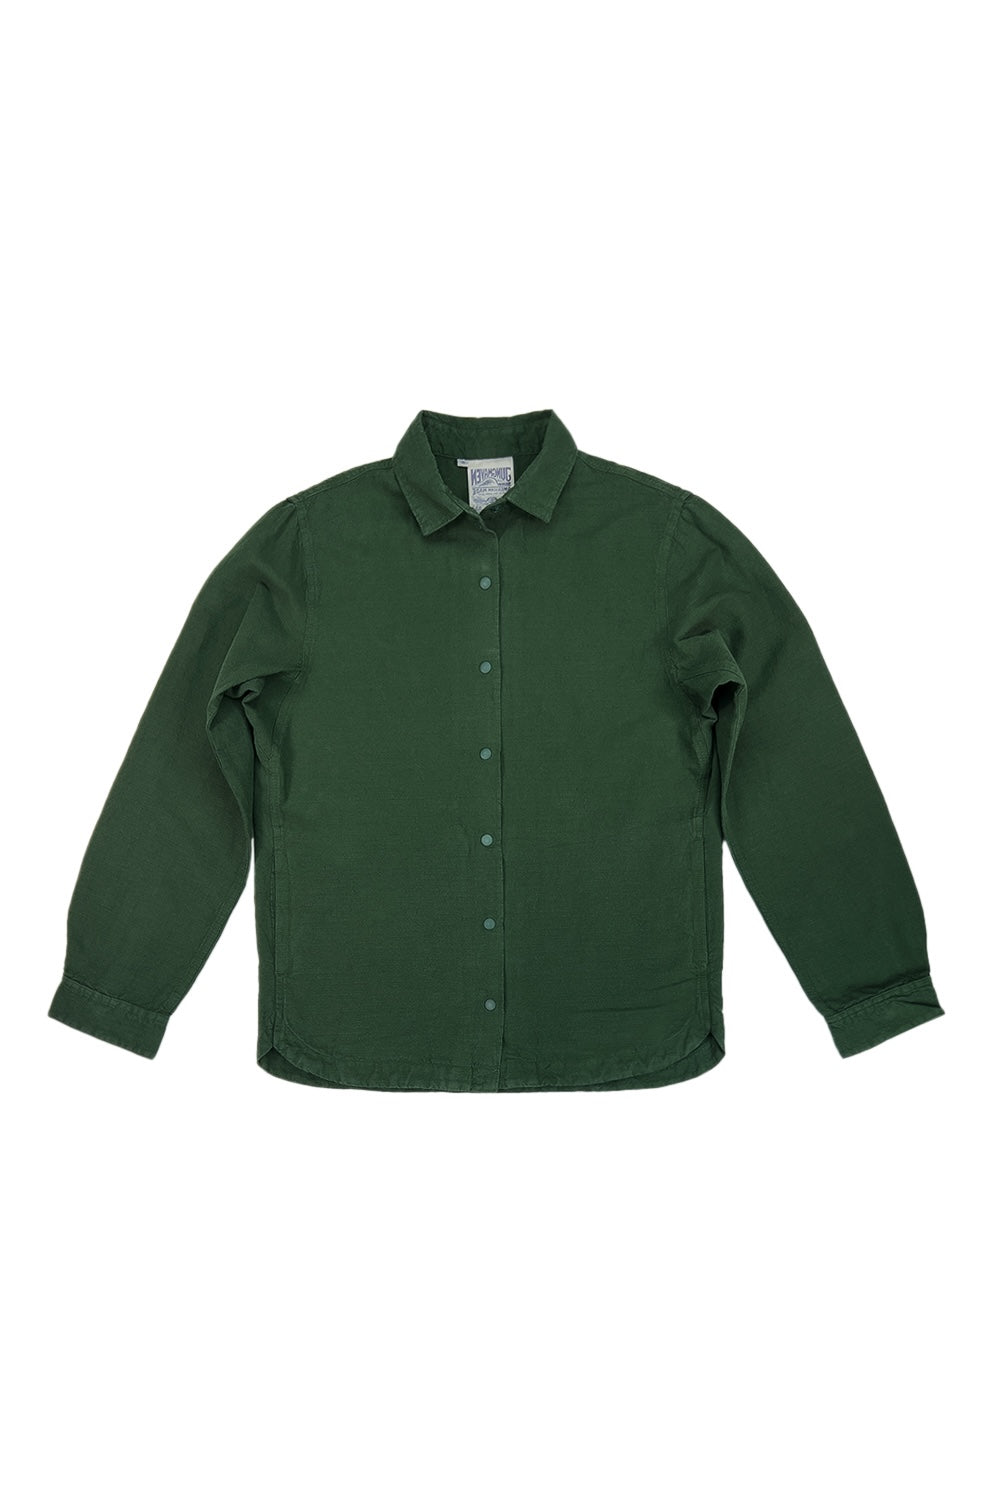 Sandpoint Snap Jacket | Jungmaven Hemp Clothing & Accessories / Color: Hunter Green